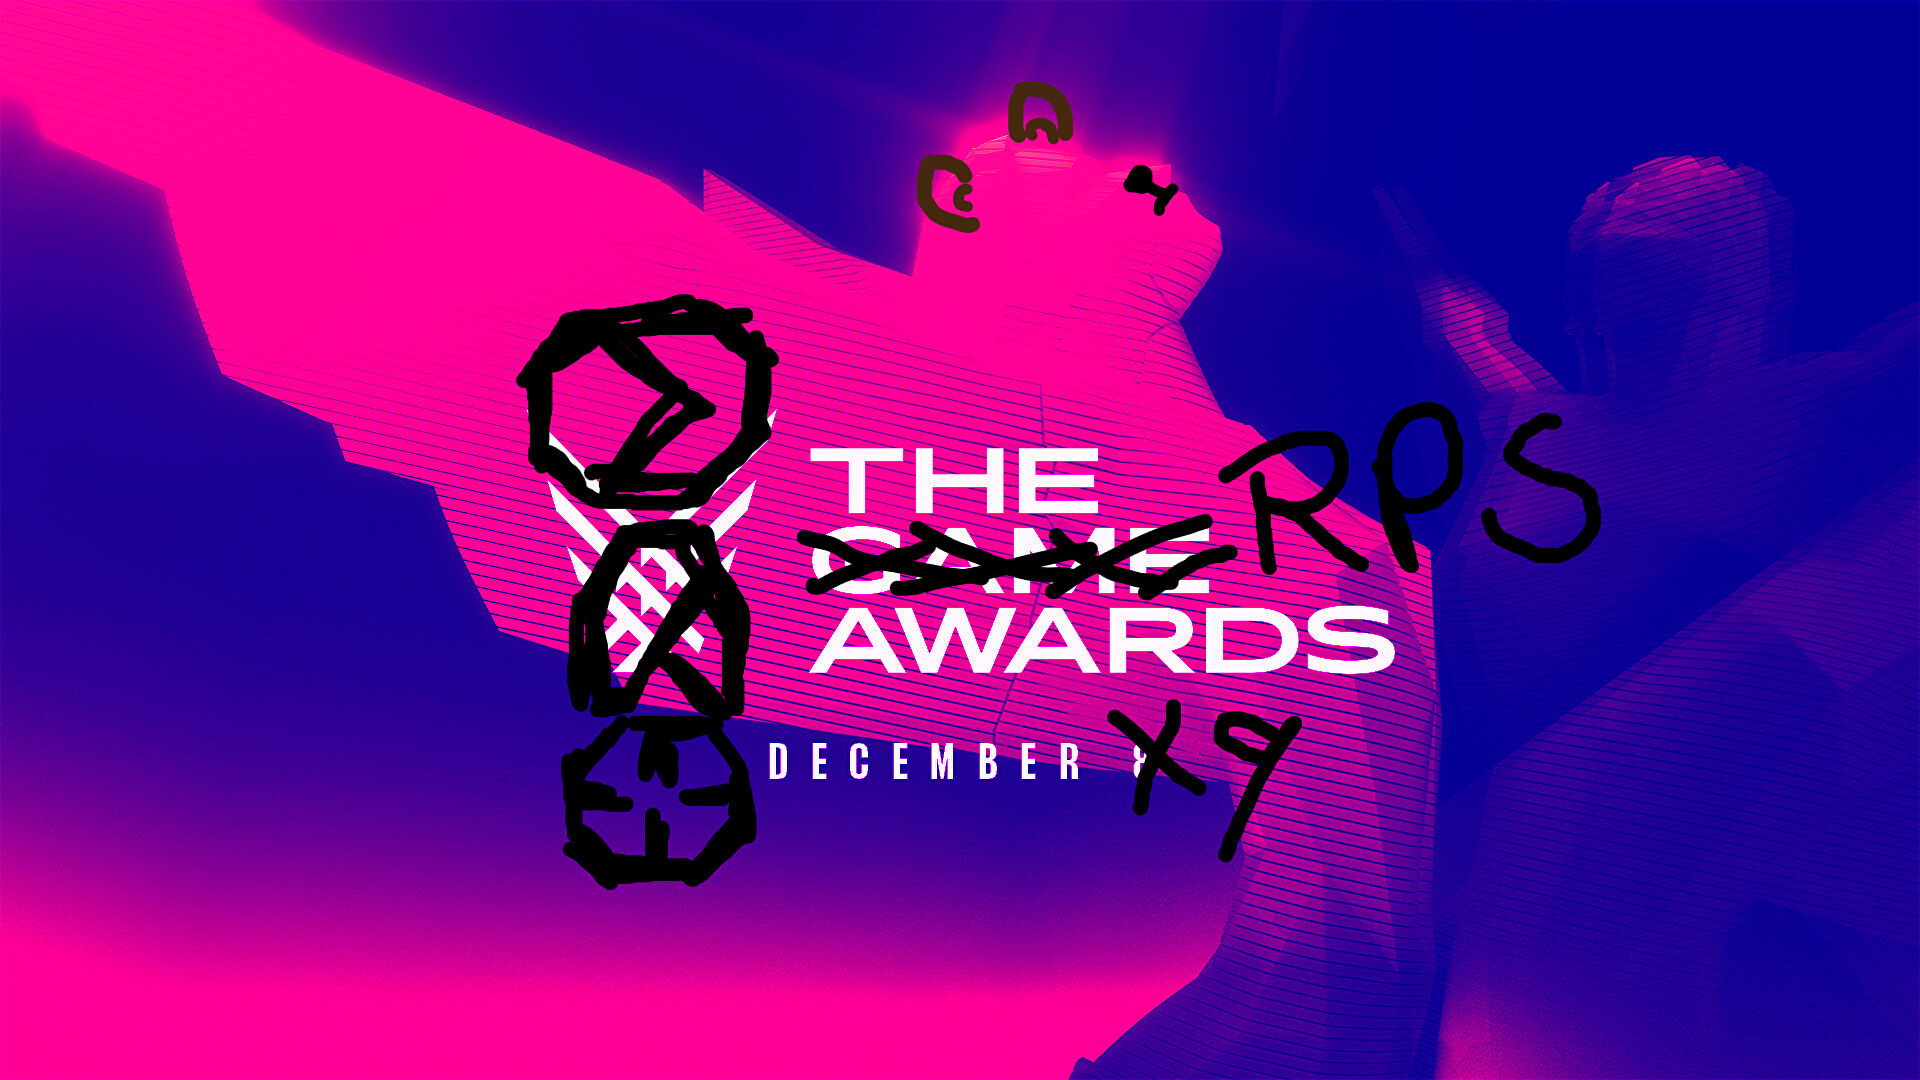 The RPS Alternative Game Awards Awards